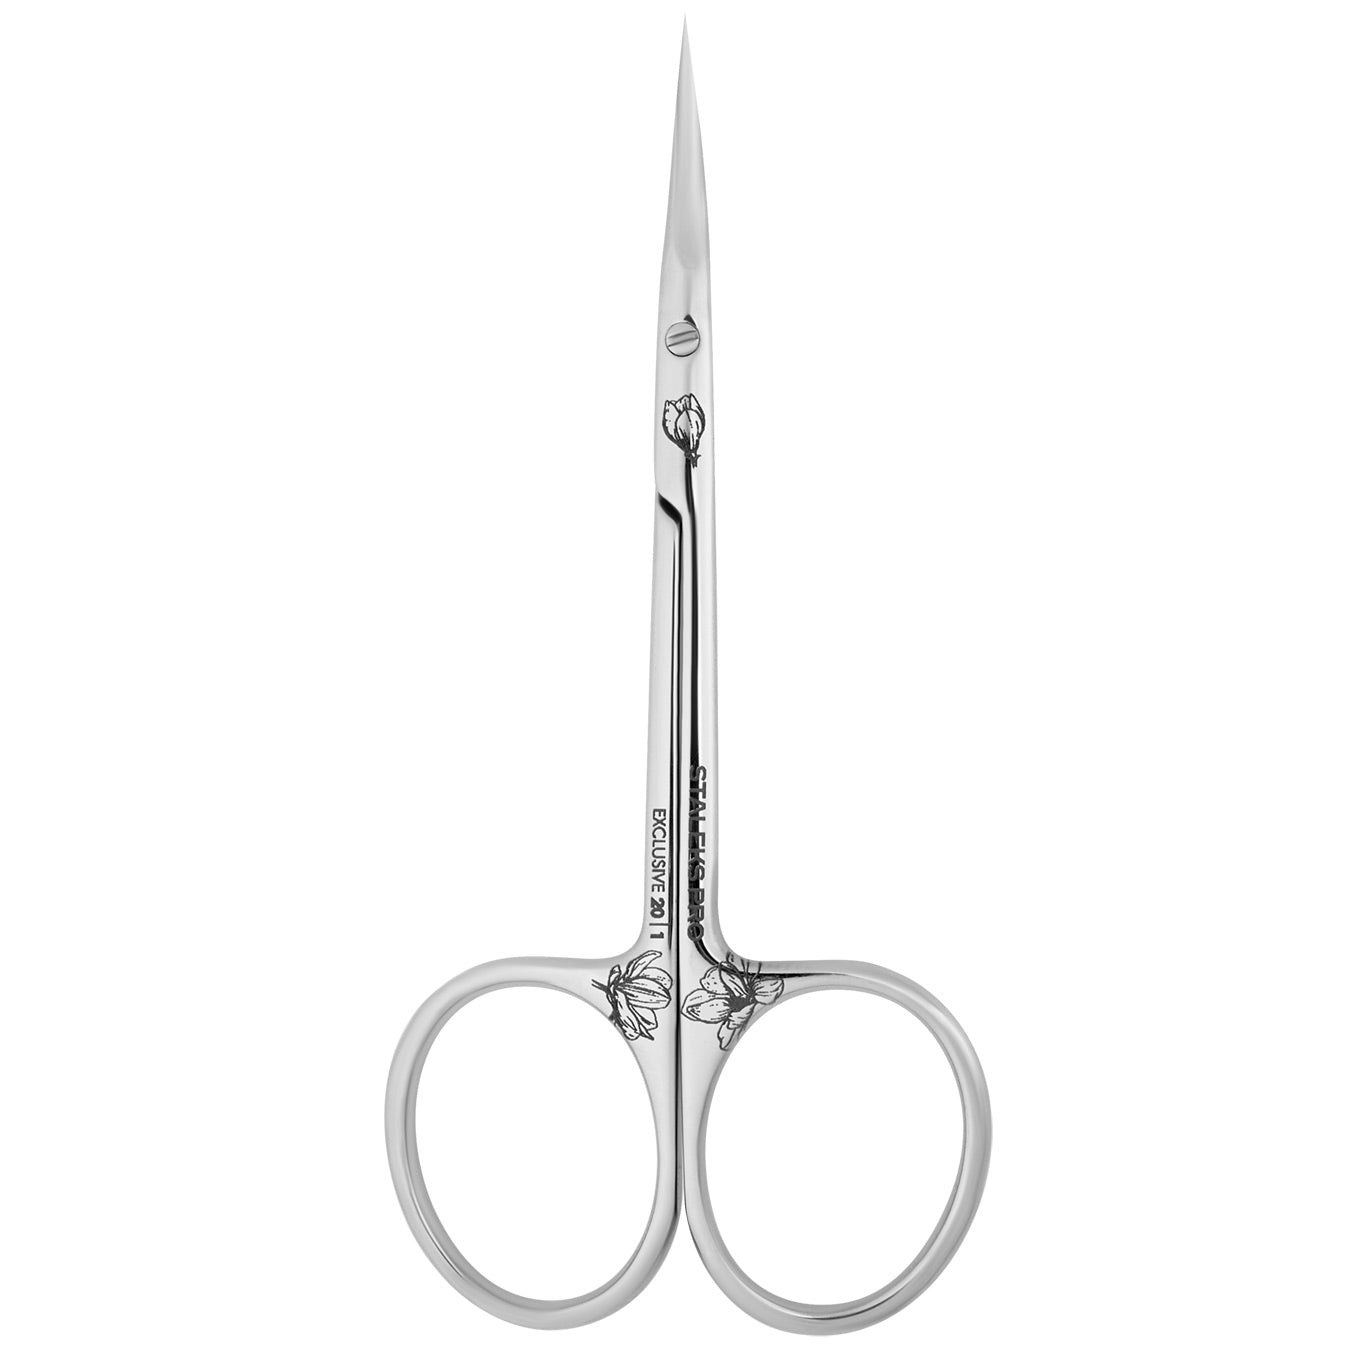 Staleks Pro Exclusive 22 TYPE 1 Professionla Cuticle Scissors SX-22/1M